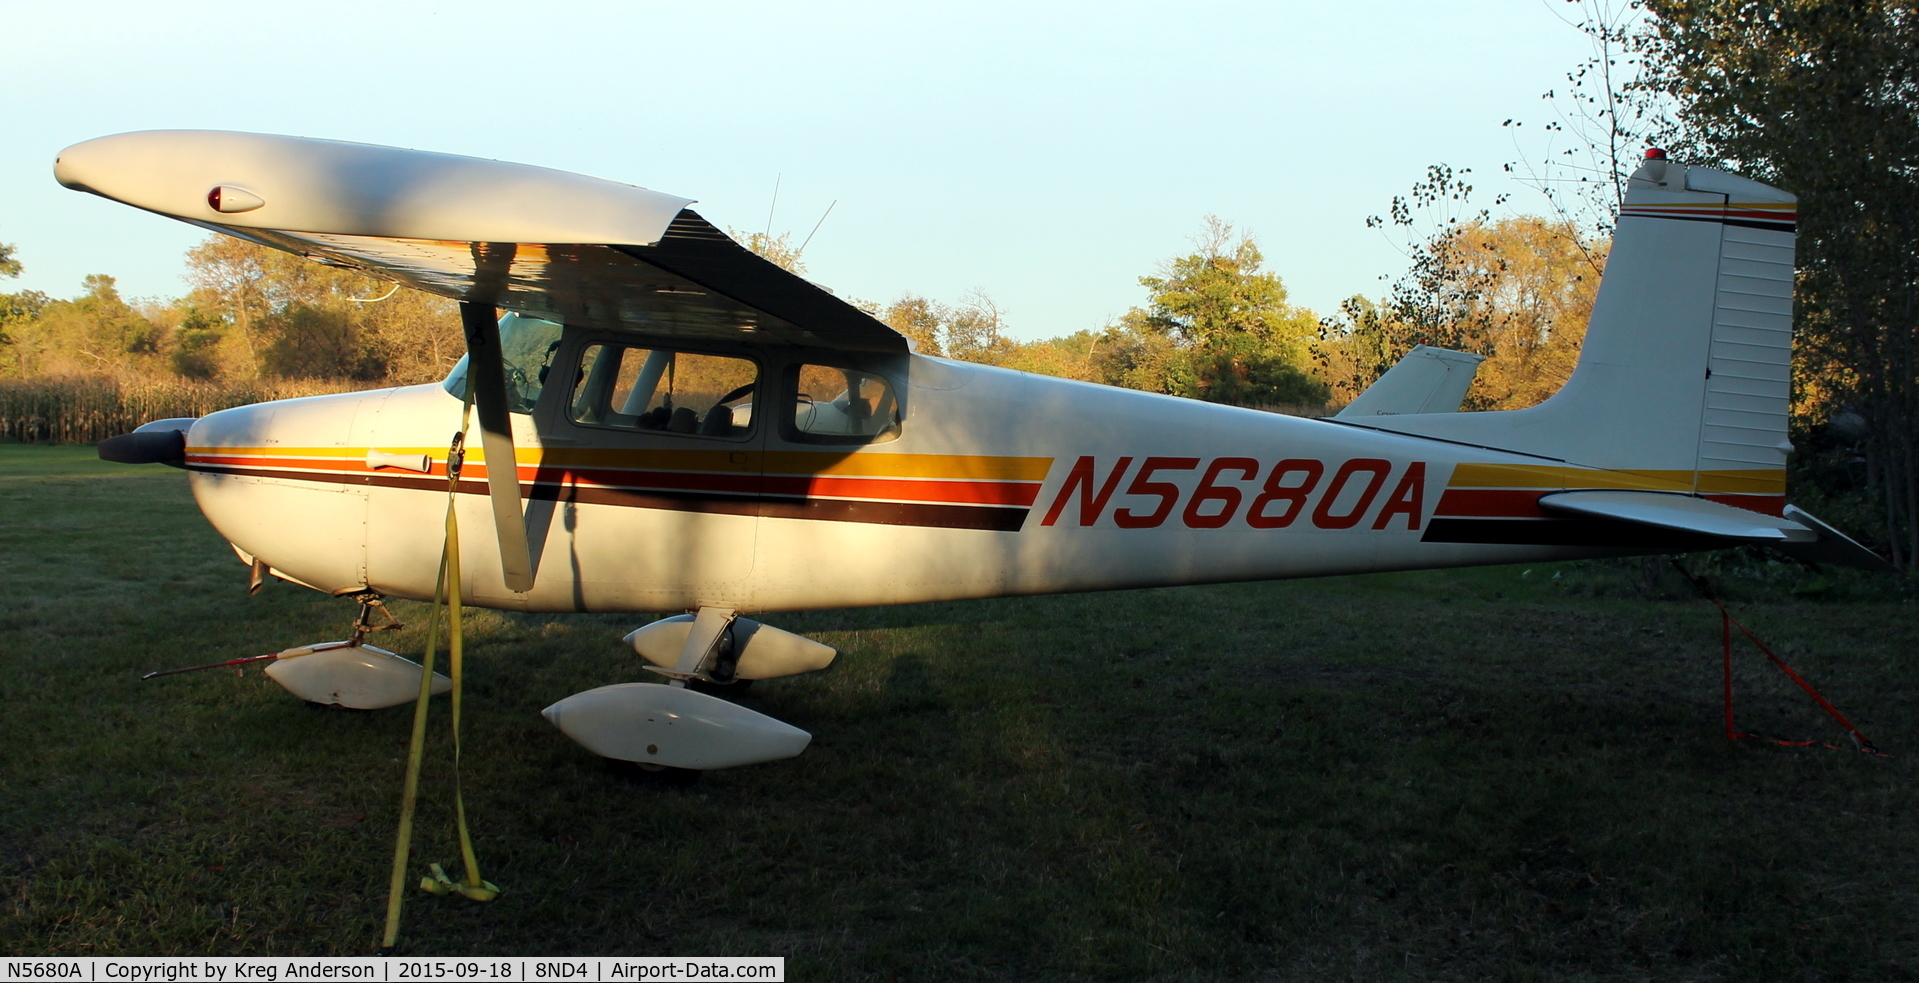 N5680A, 1956 Cessna 172 C/N 28280, 2015 EAA Chapter 1342 Fall Hog Roast and Camp Out